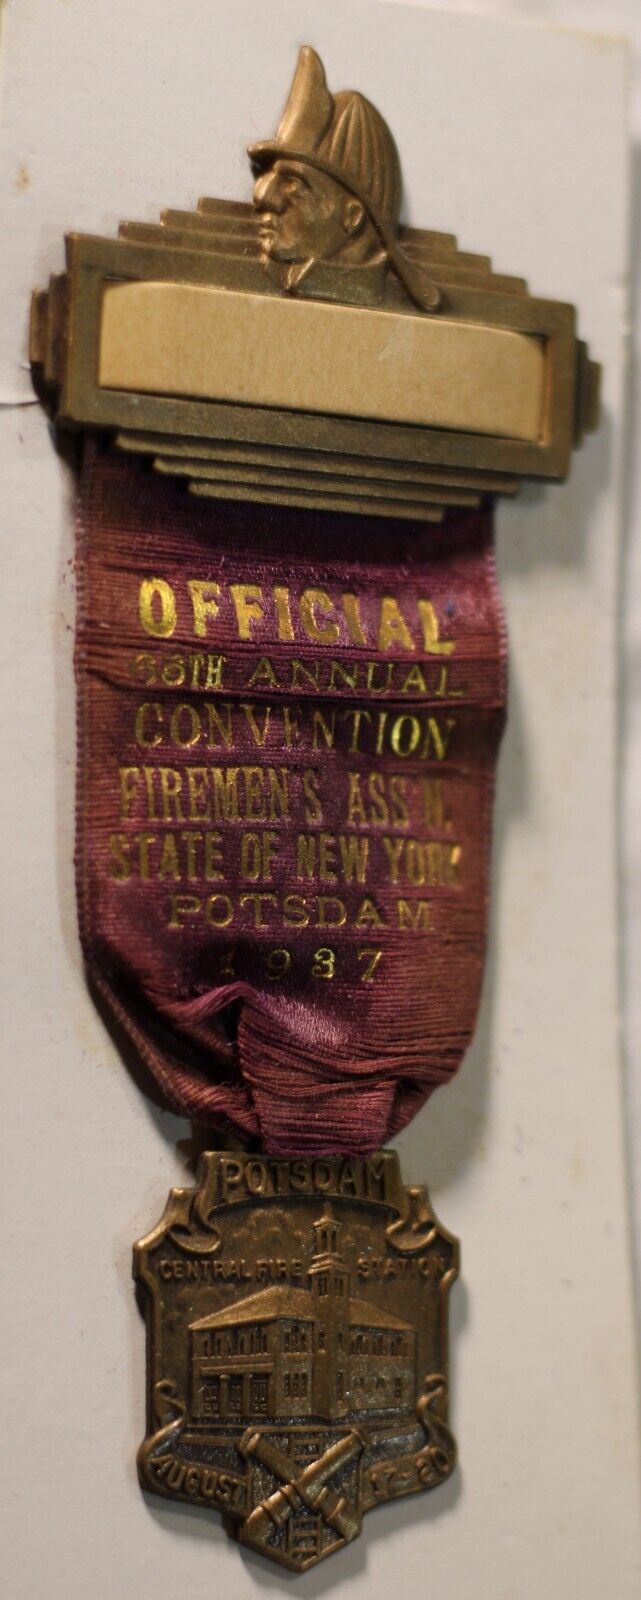 Vintage 1937 Firemen's Association Medal - State of New York, Potsdam